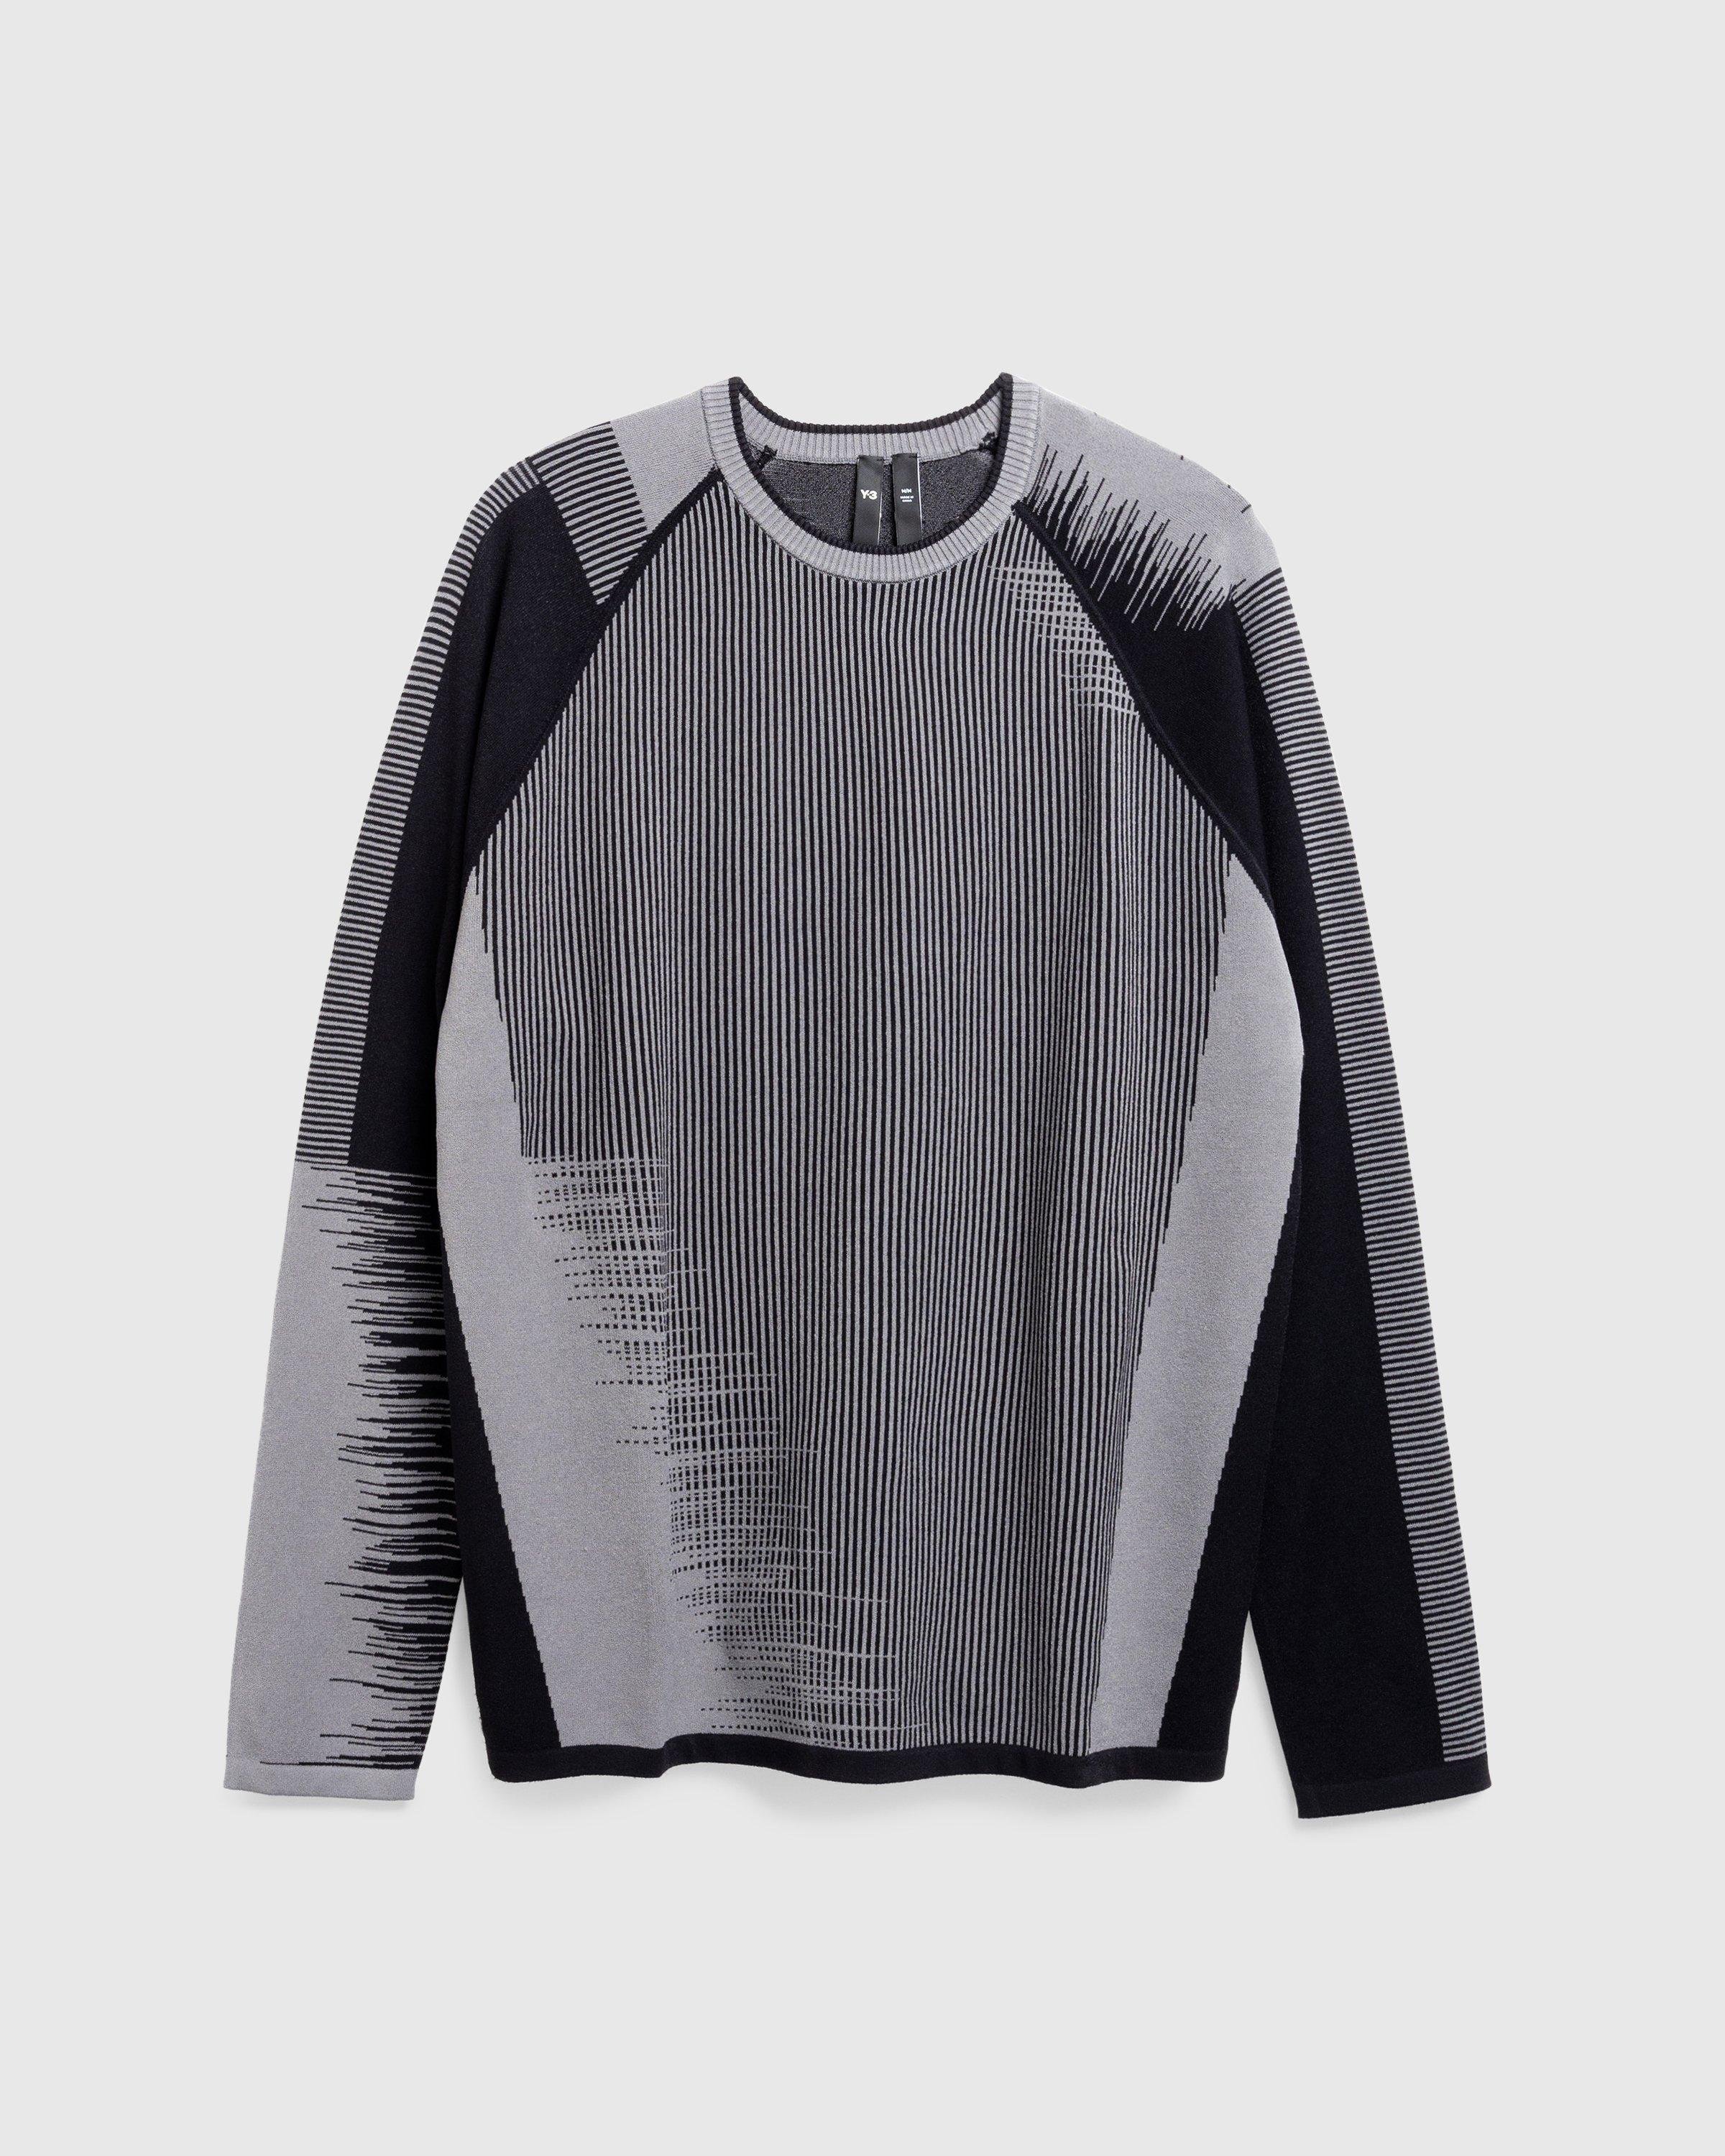 Y-3Logo Knit Sweater Black/Gray by HIGHSNOBIETY